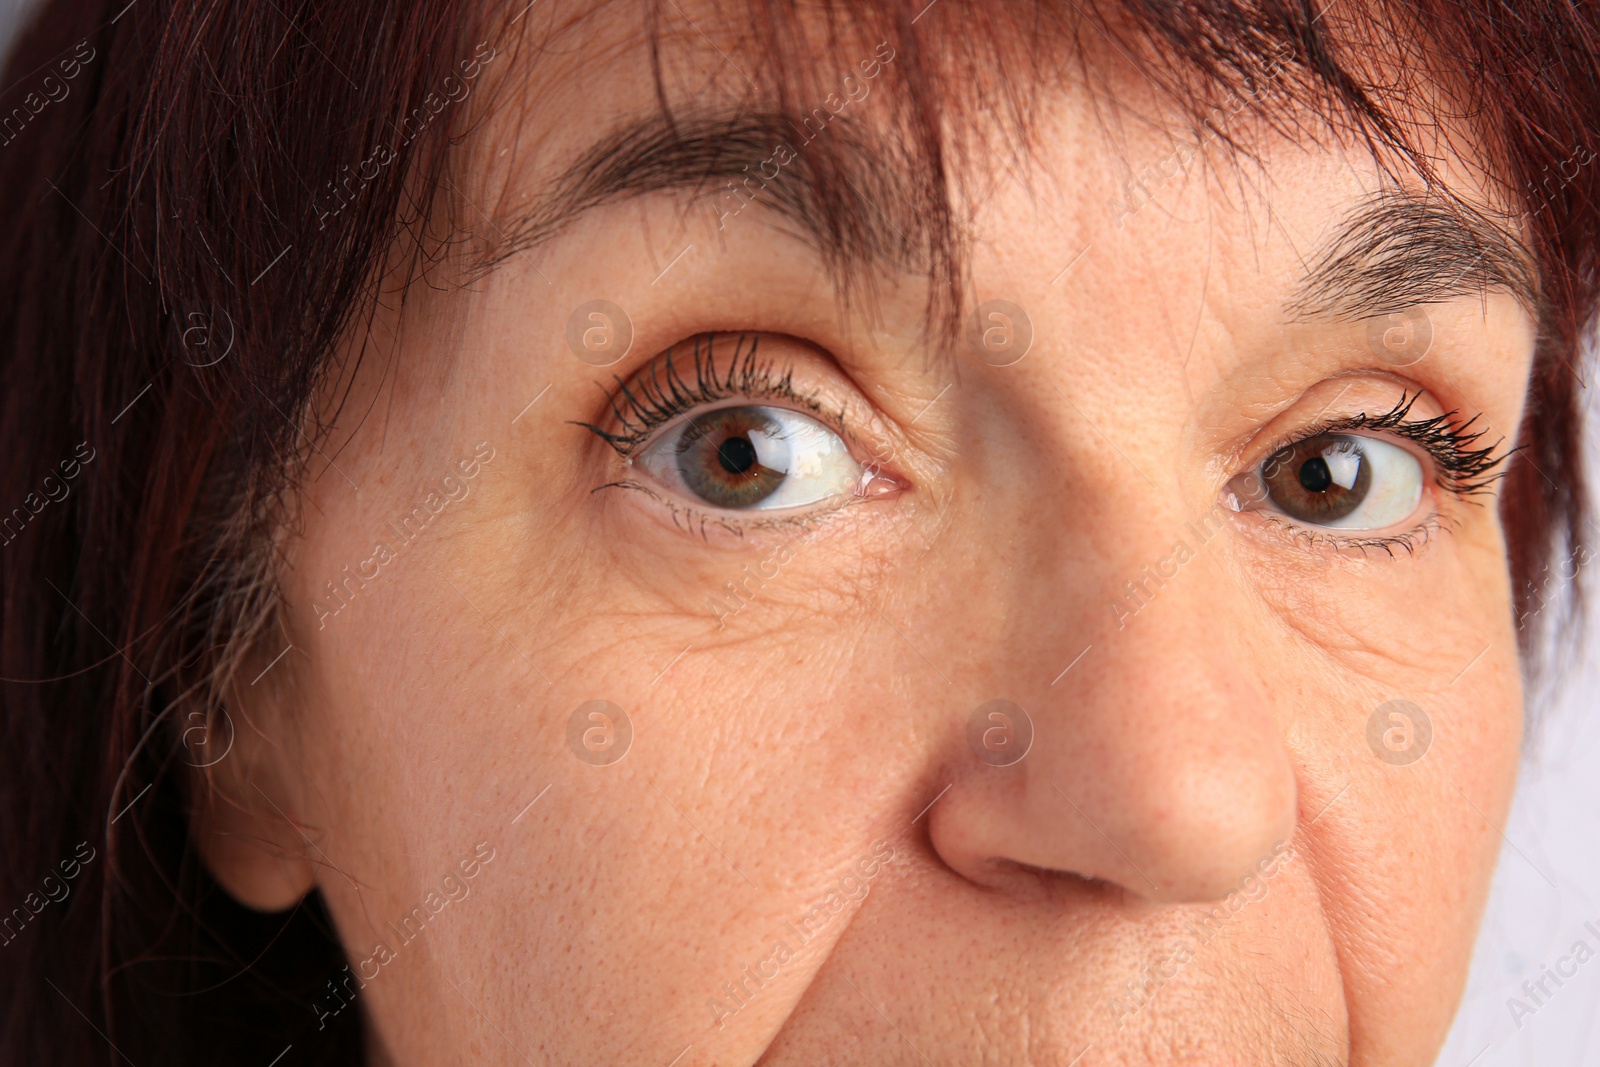 Photo of Skin care. Senior woman, closeup view of eyes